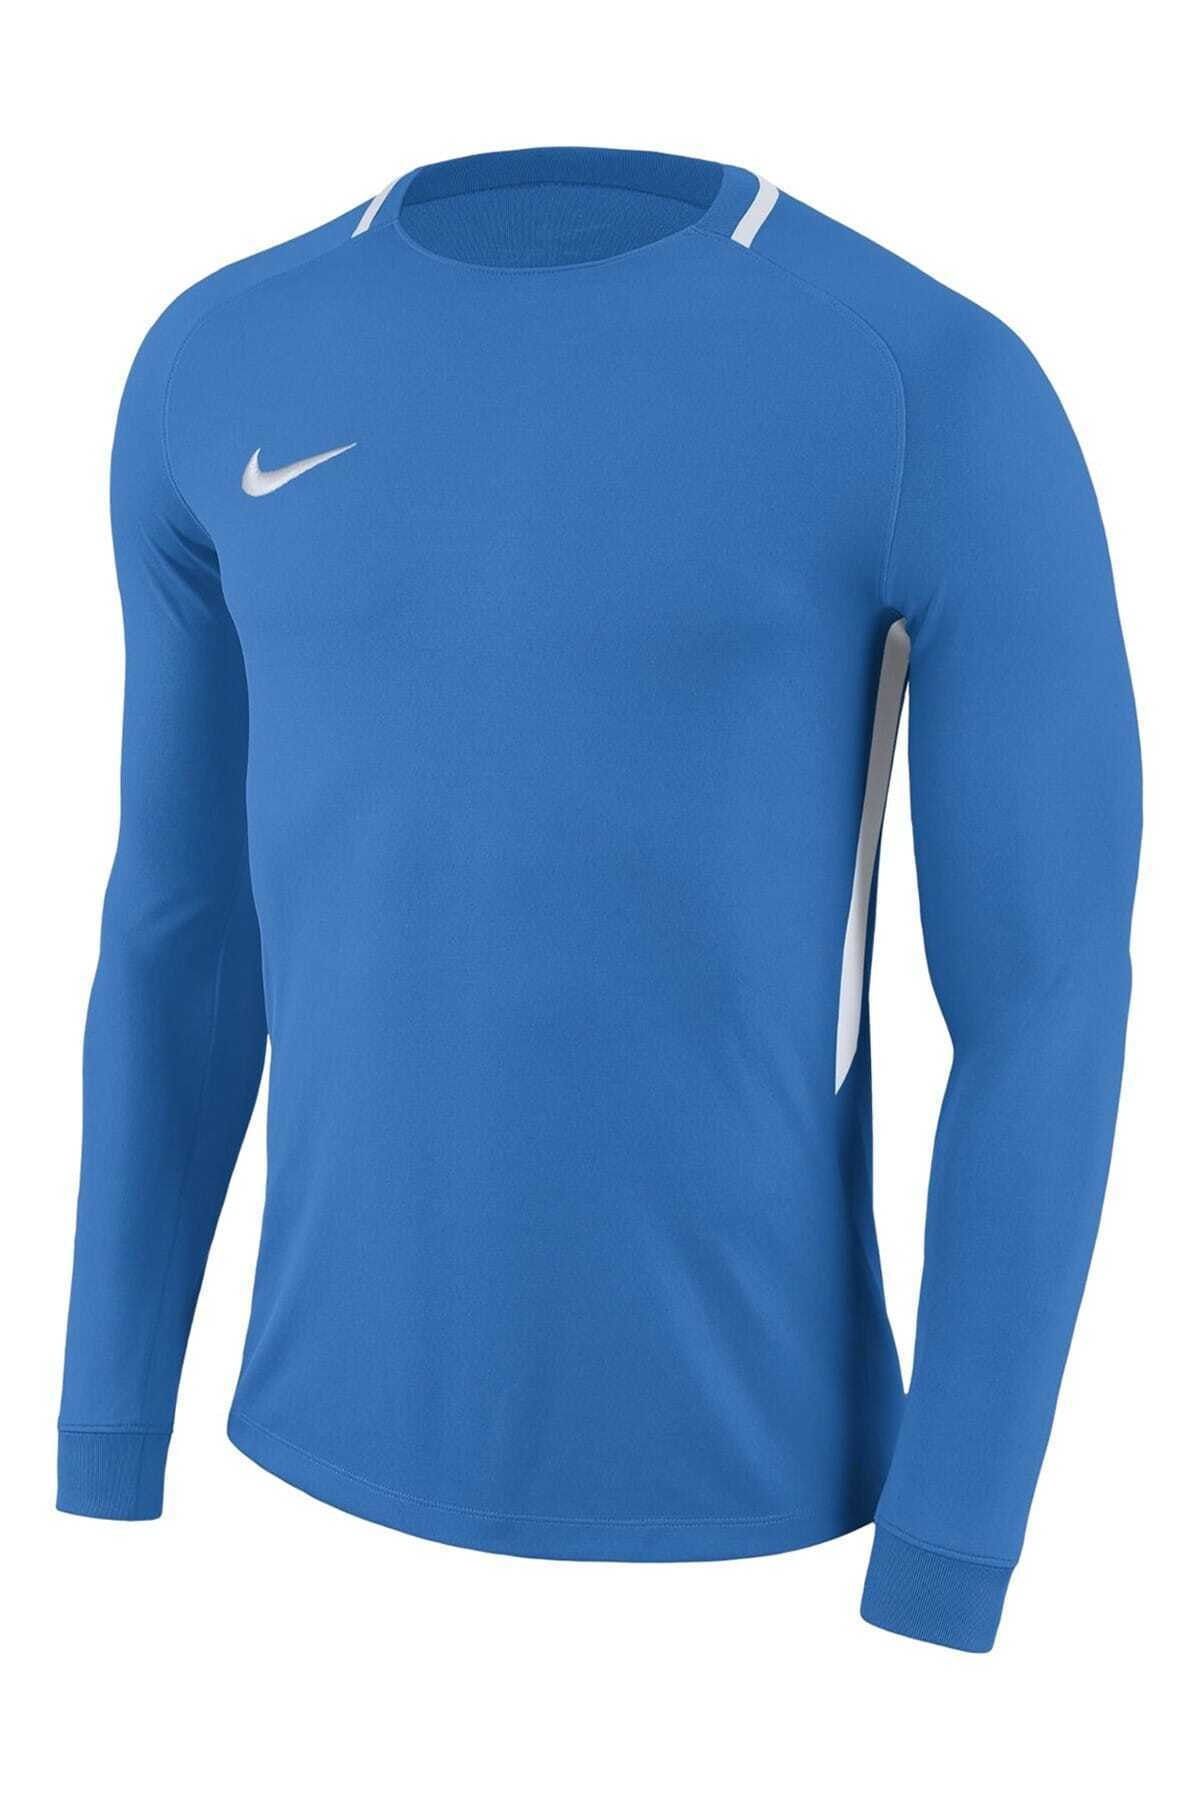 Nike Erkek Mavi Sweatshirt - M Nk Dry Park Iıı Jsy Ls Gk - 894509-406